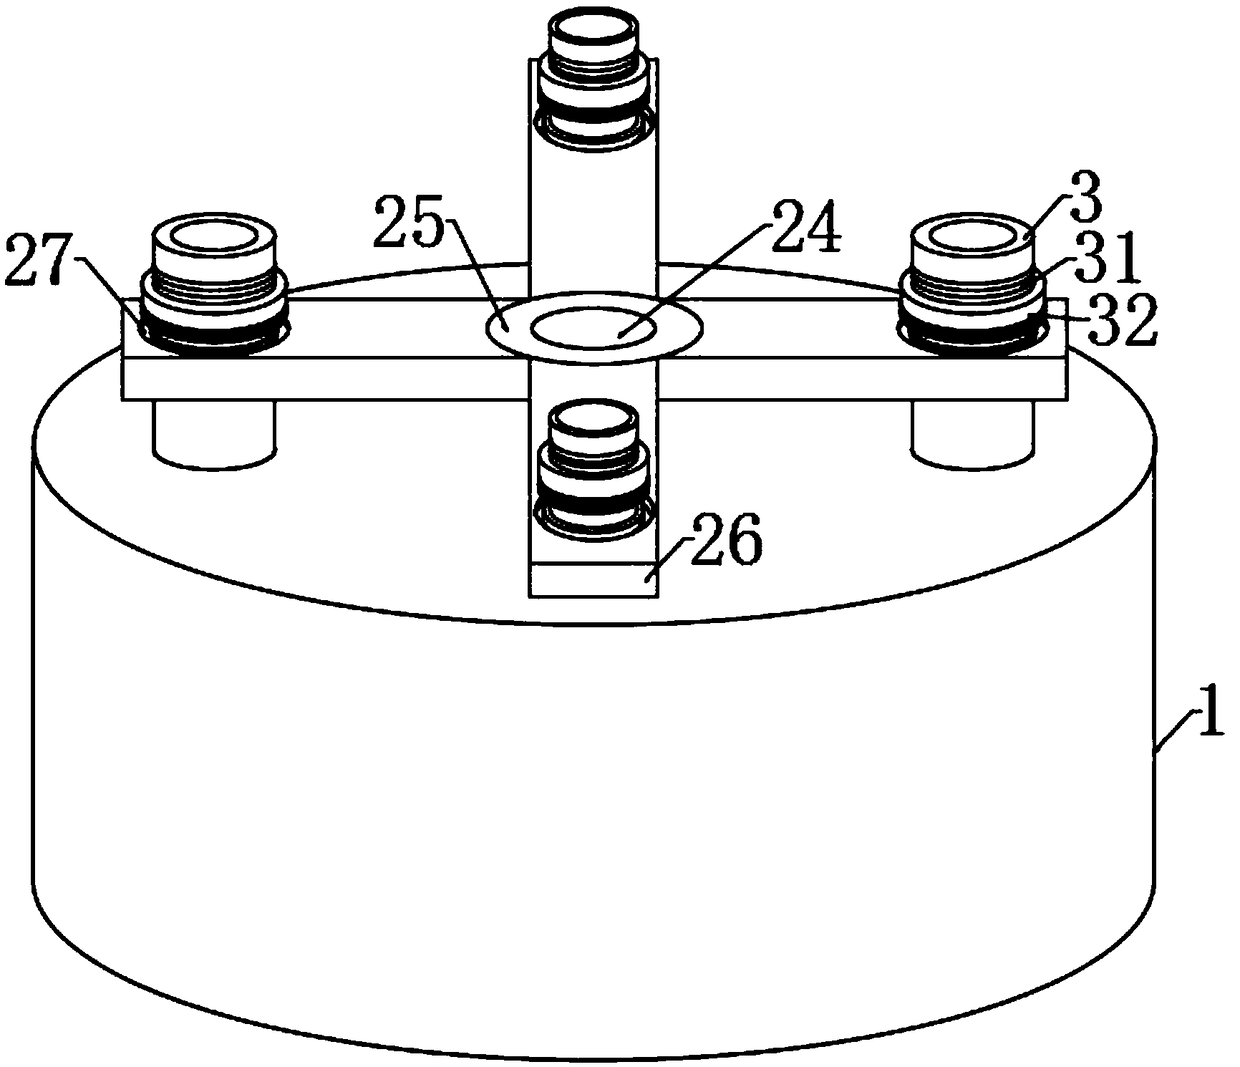 Multi-ocular rotary adjusting type operation microscope